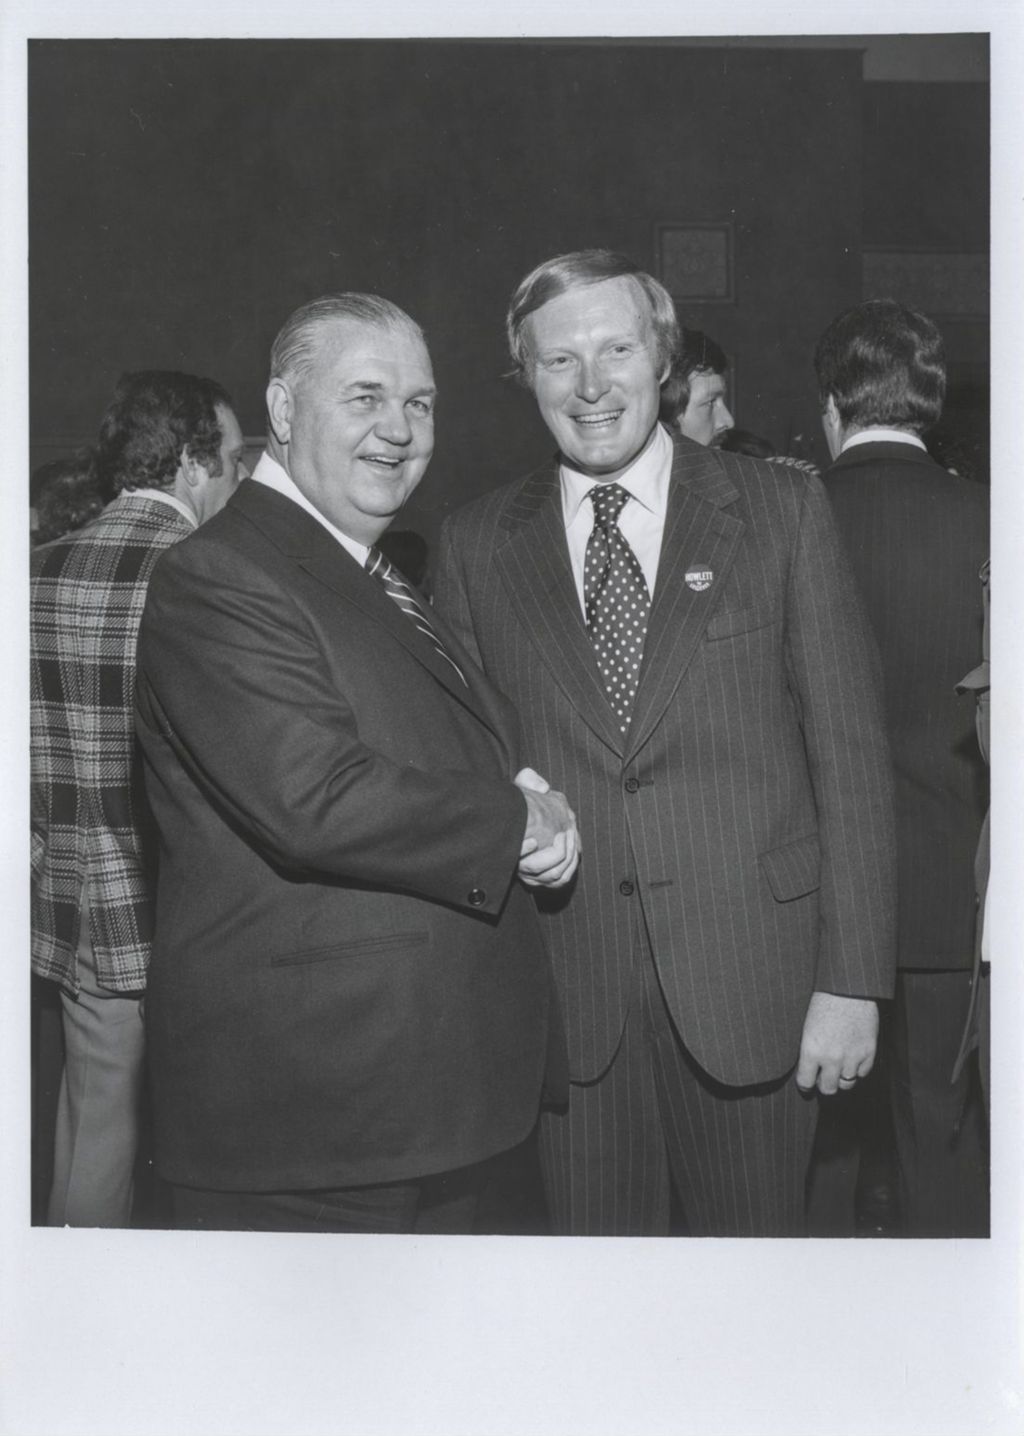 Miniature of Michael J. Howlett and Lt. Governor Neil Hartigan shaking hands